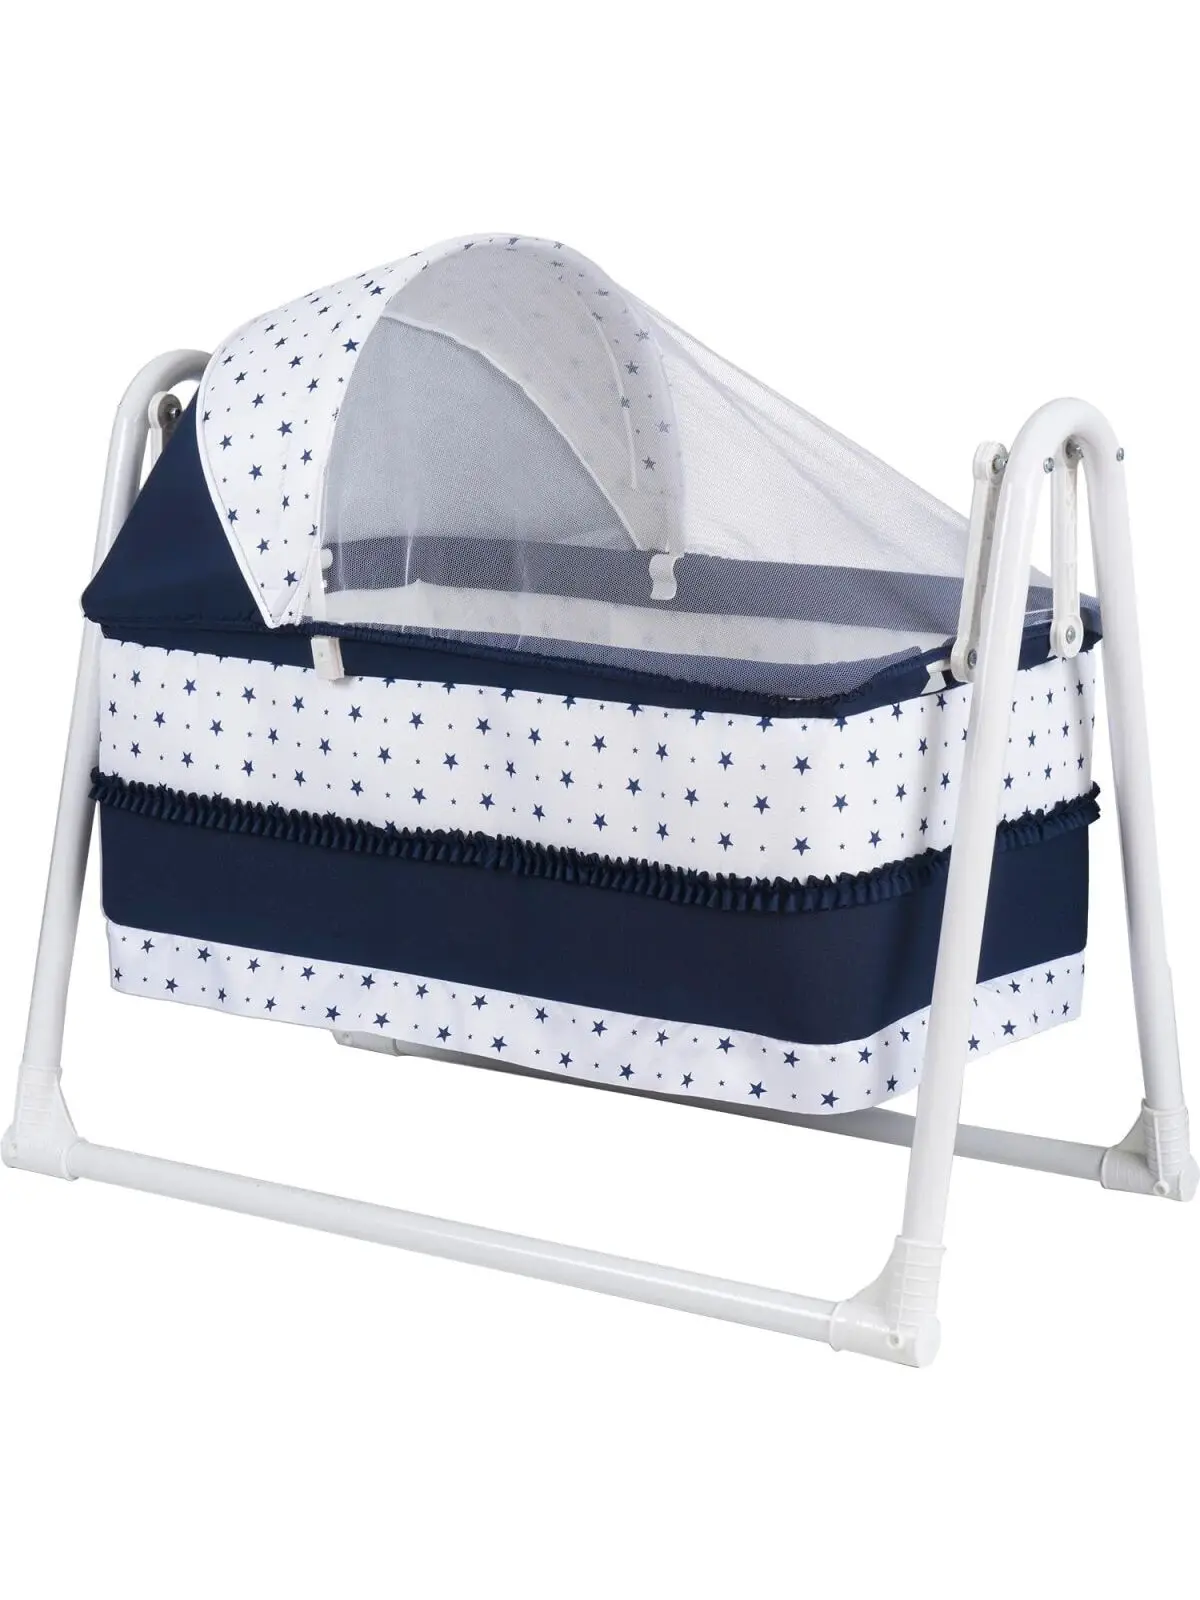 Dark blue Portable Rocking Basket Hammock Crib Baby Furniture Products Bebe Girl Boy Kids Accessories Maintenance Free Shipping